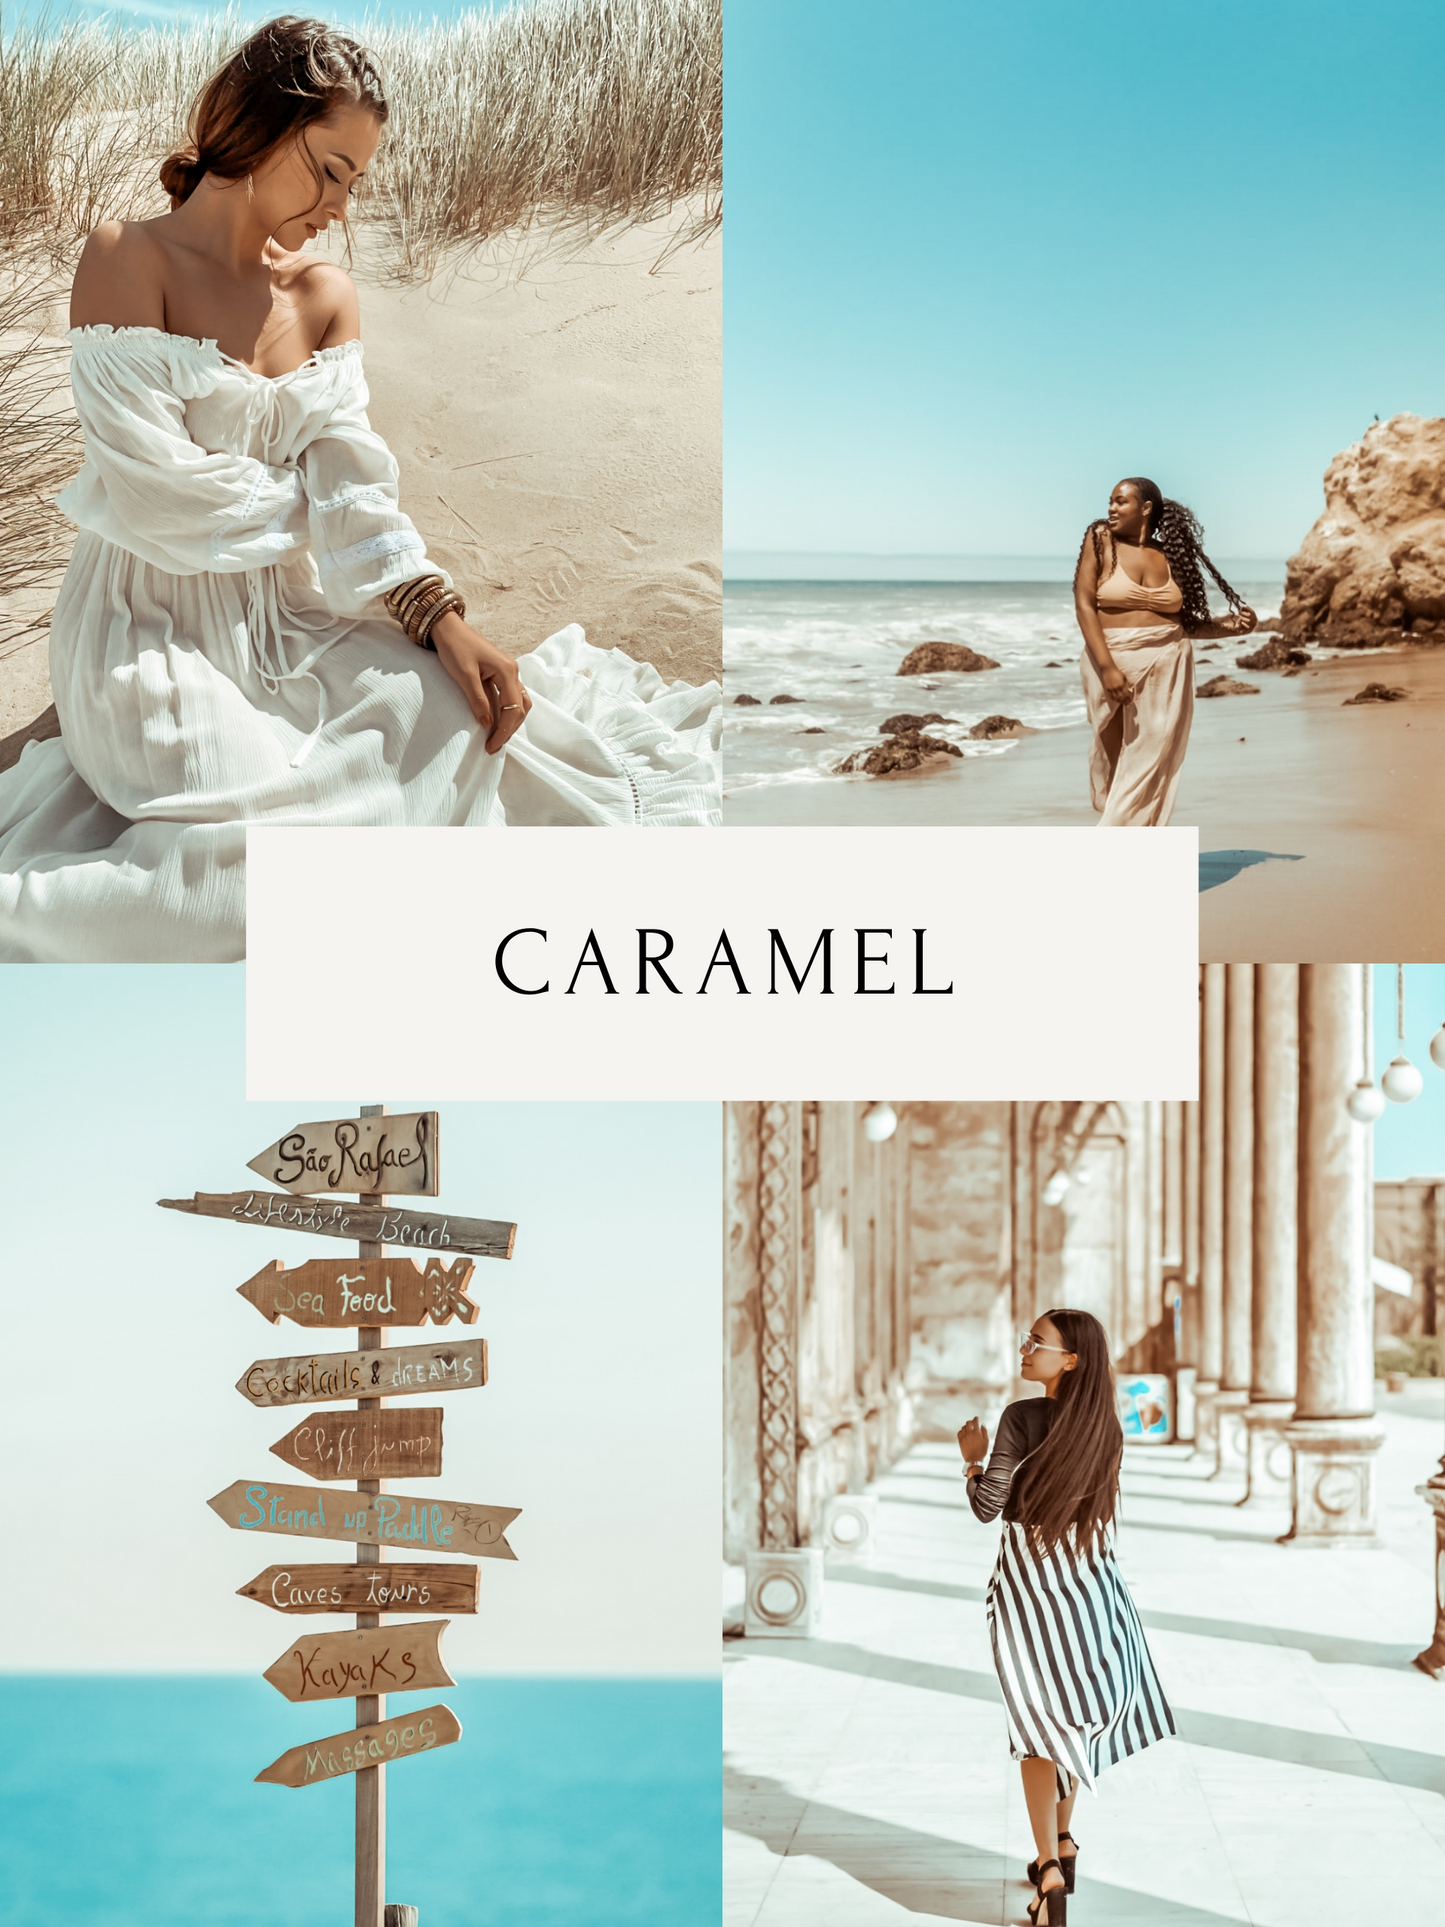 Caramel - One Click Filter